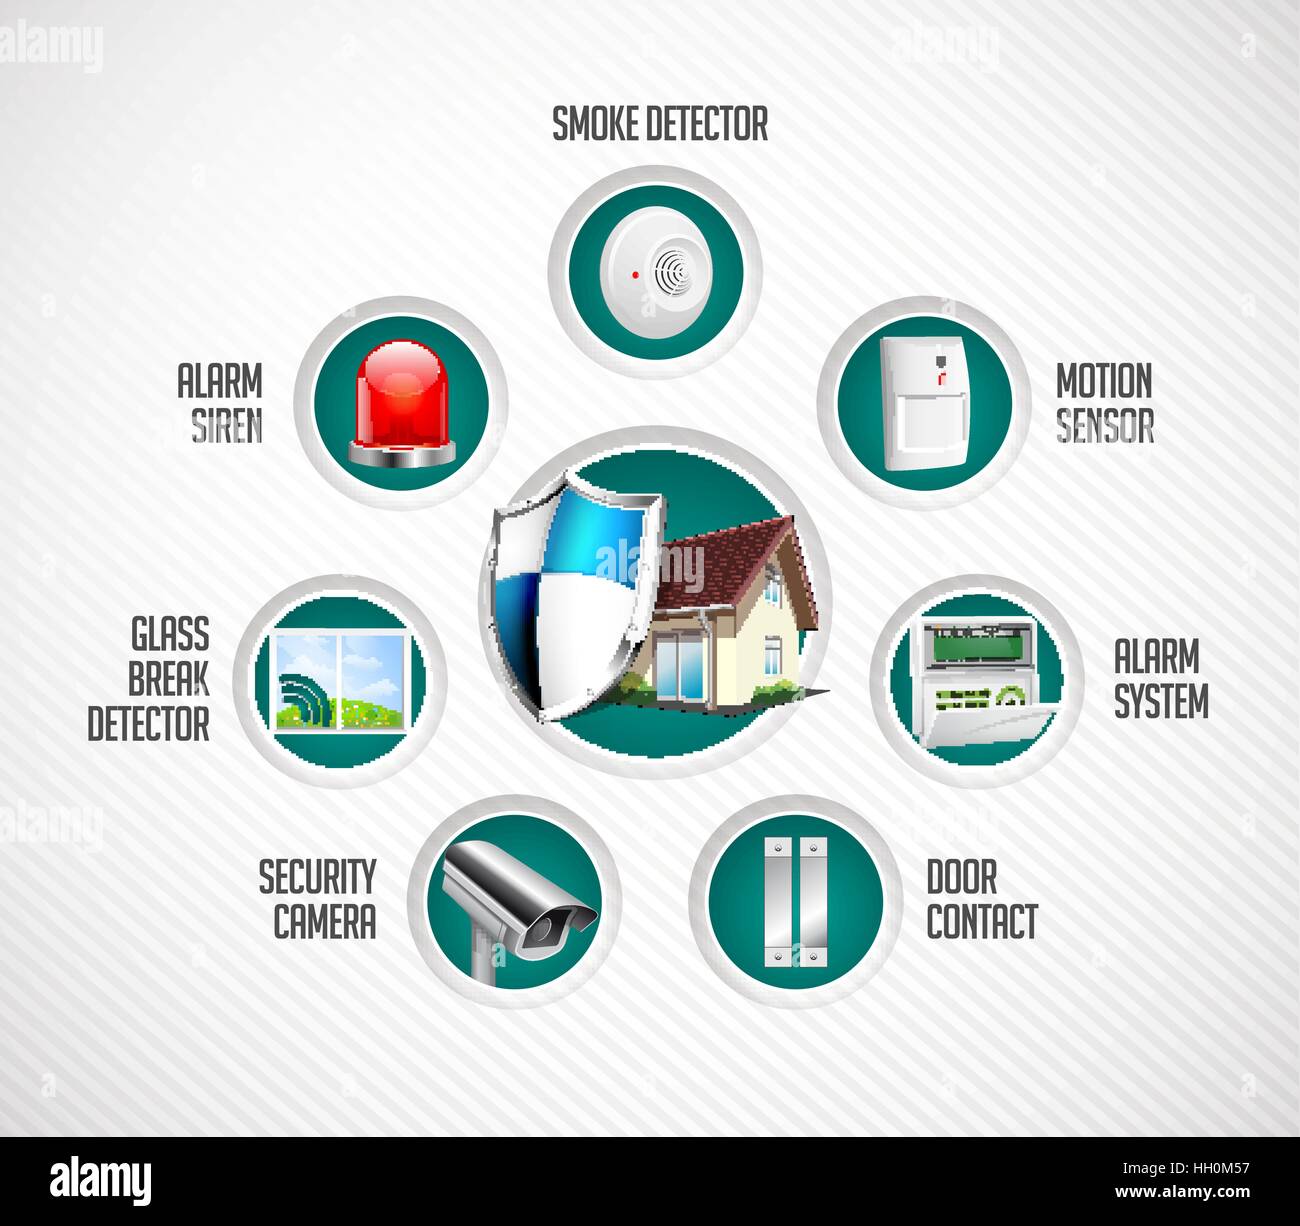 Home-Security-System-Konzept - Gassensor, cctv-Kamera, Bewegungsmelder, Alarm-Sirene Stock Vektor